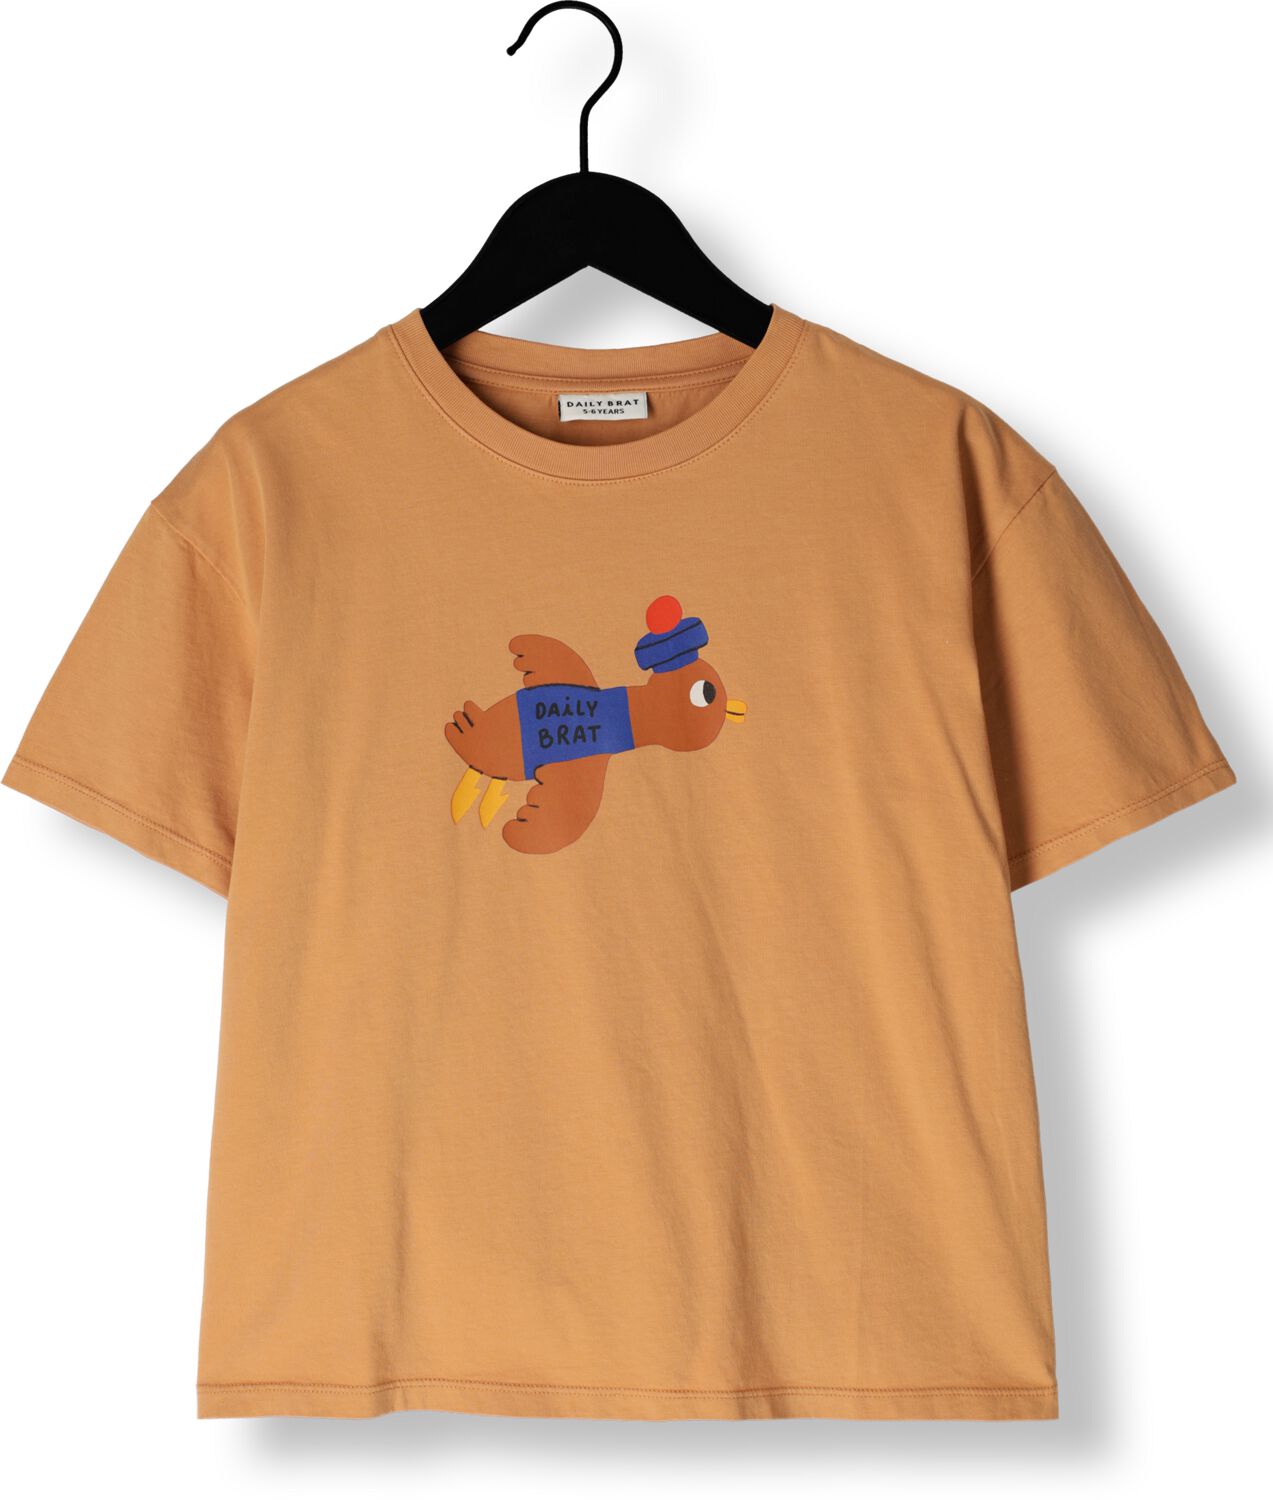 DAILY BRAT Meisjes Tops & T-shirts Flying Wabler T-shirt Bruin